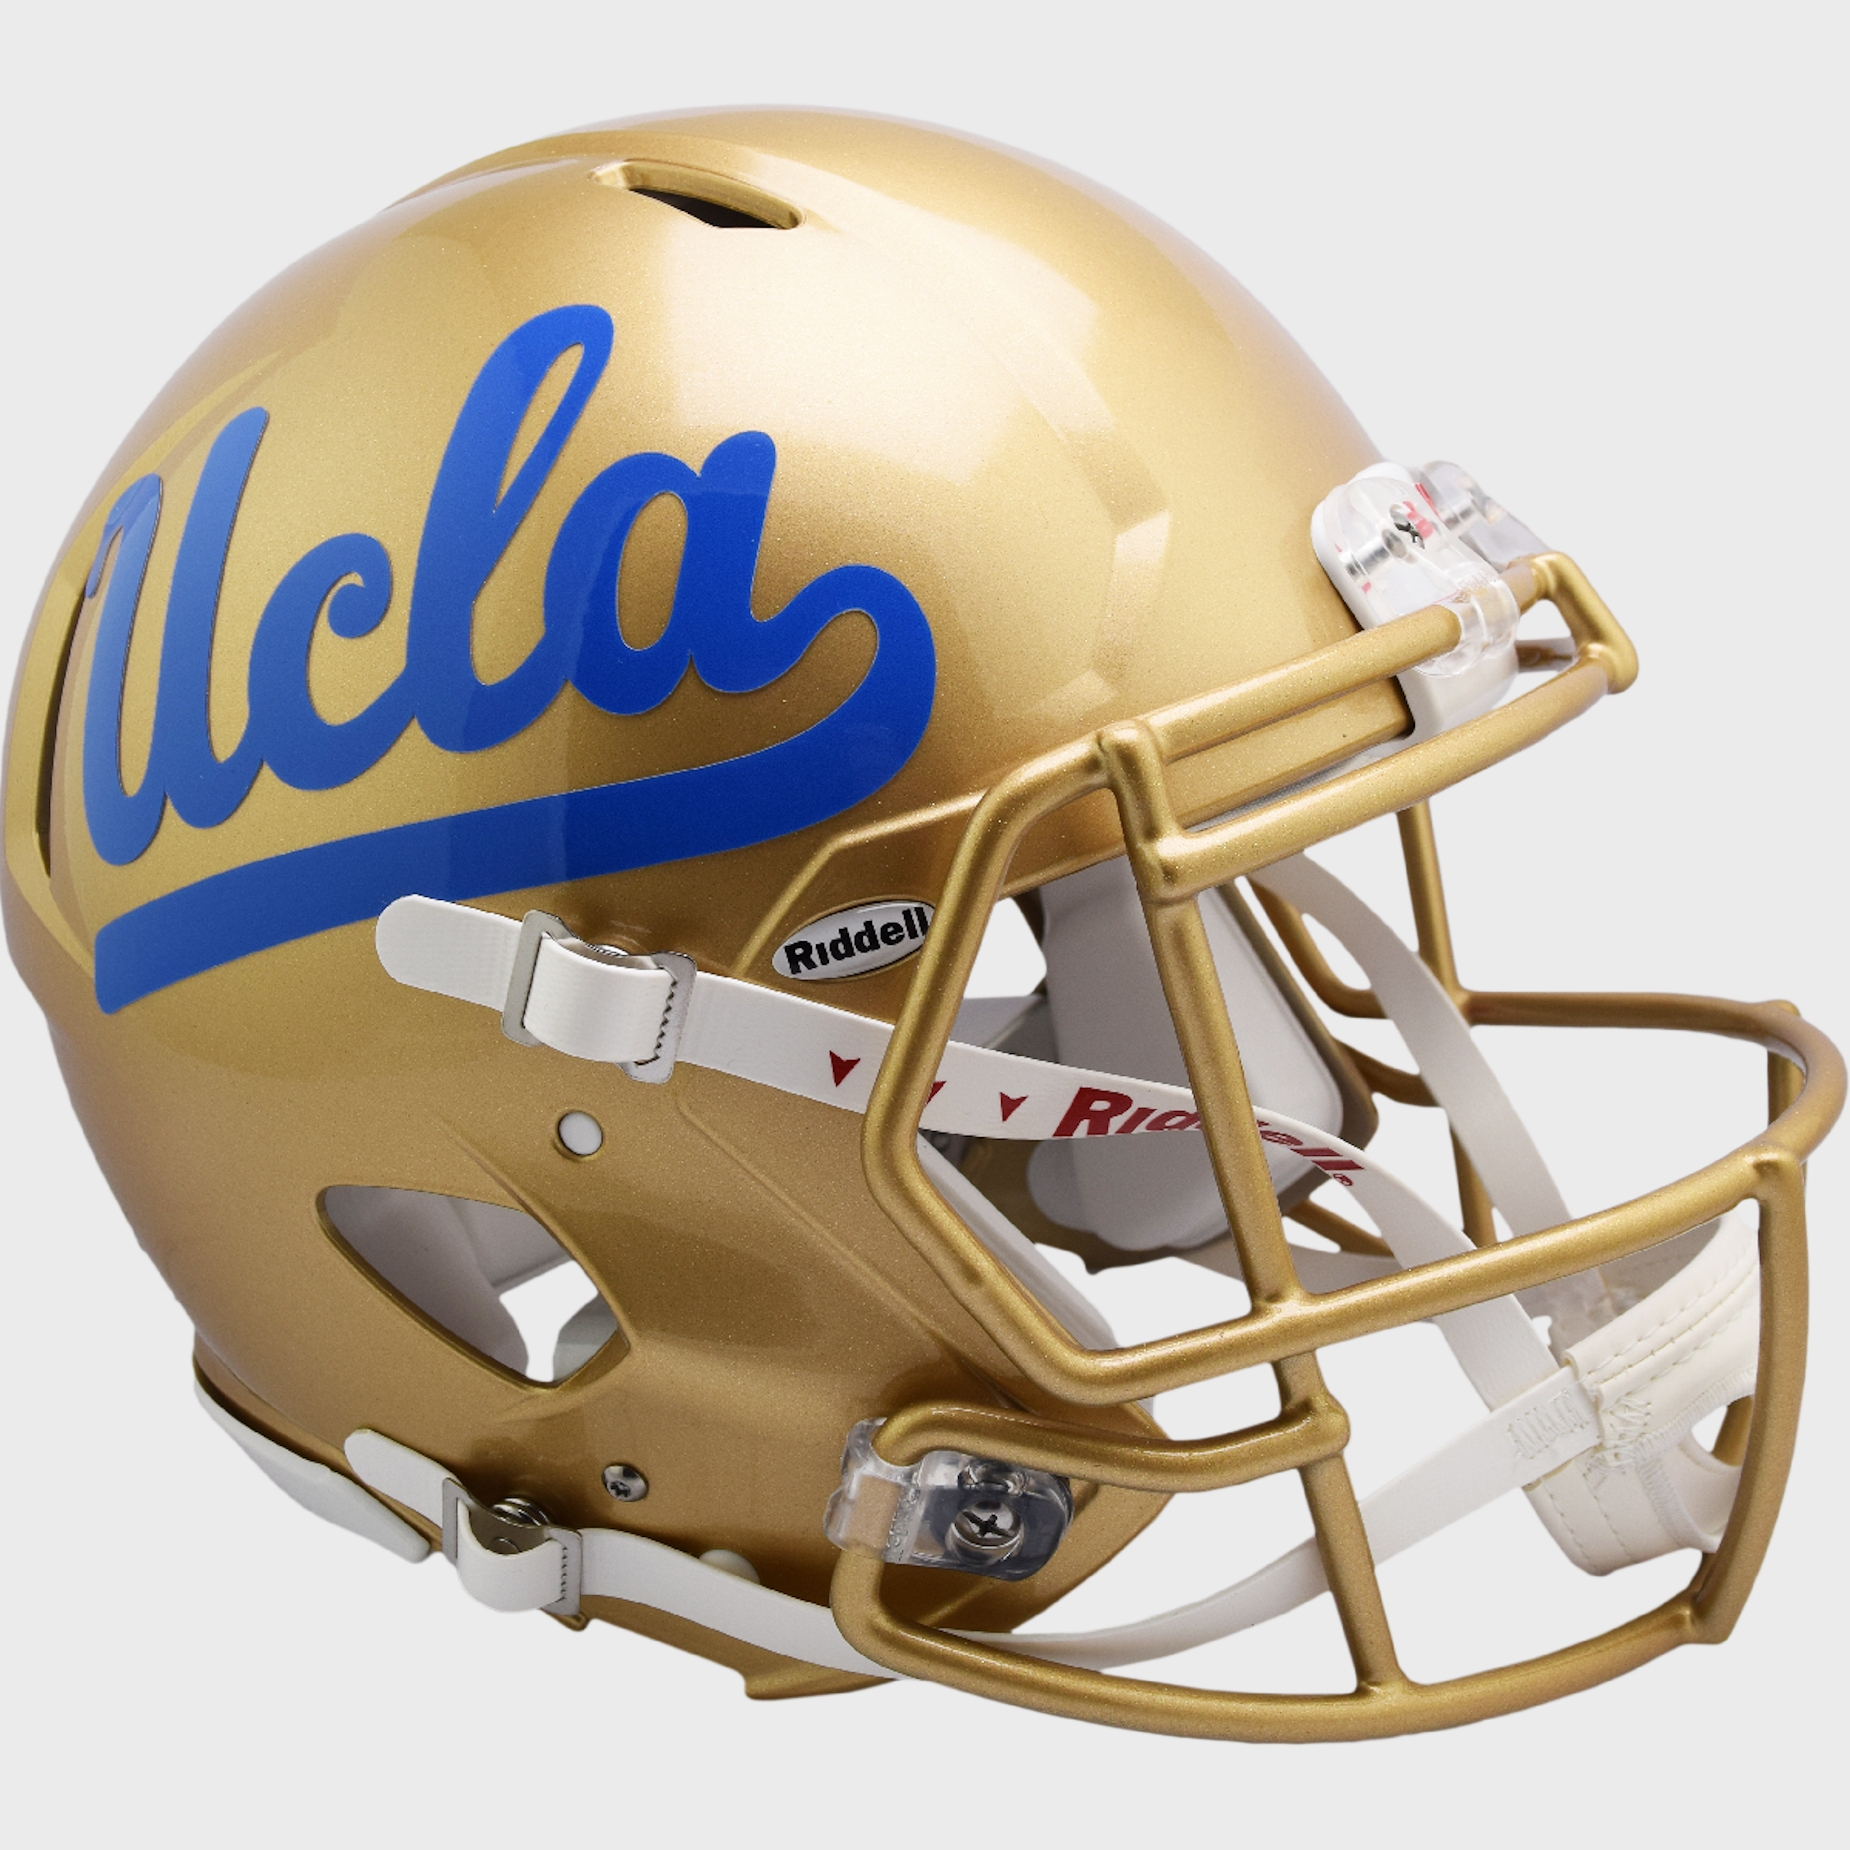 UCLA Bruins authentic full size helmet